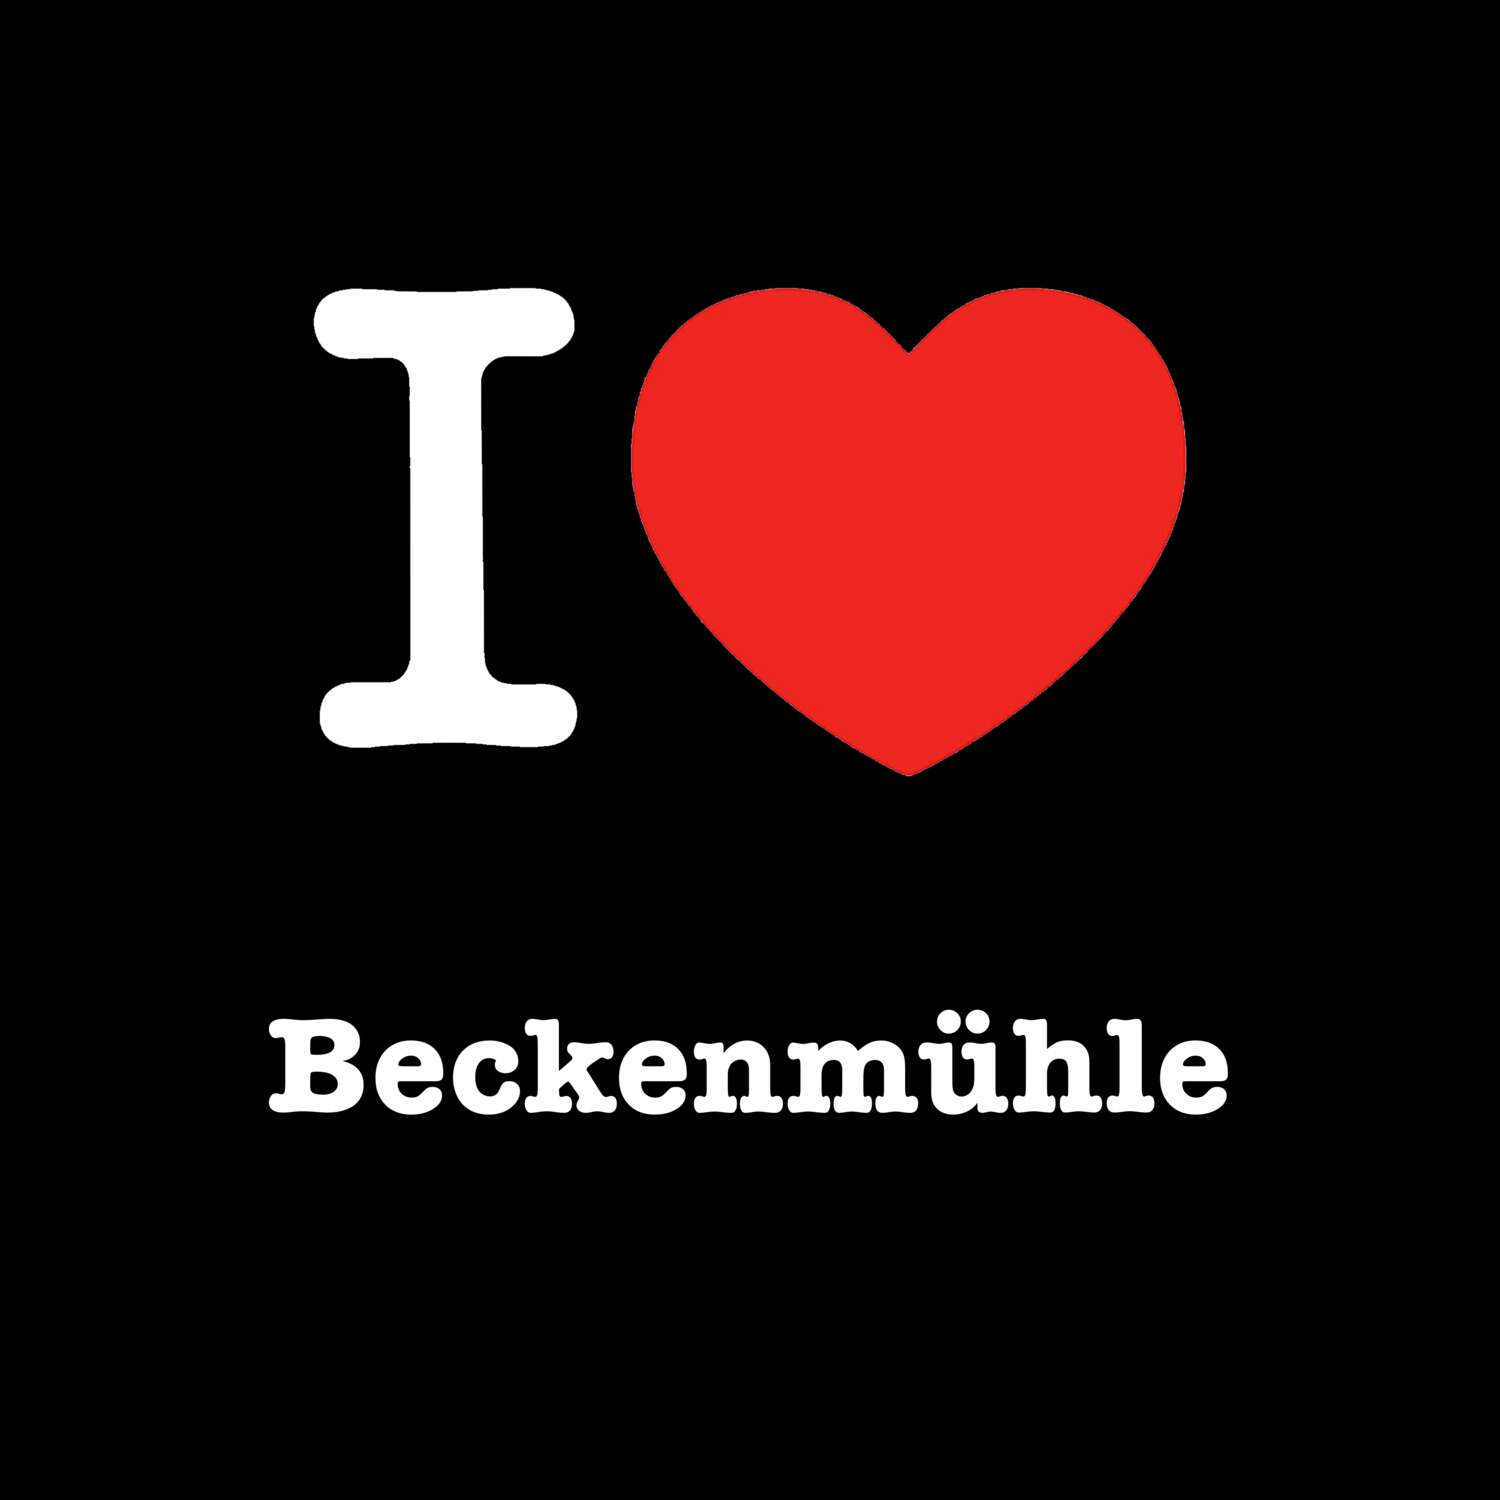 Beckenmühle T-Shirt »I love«